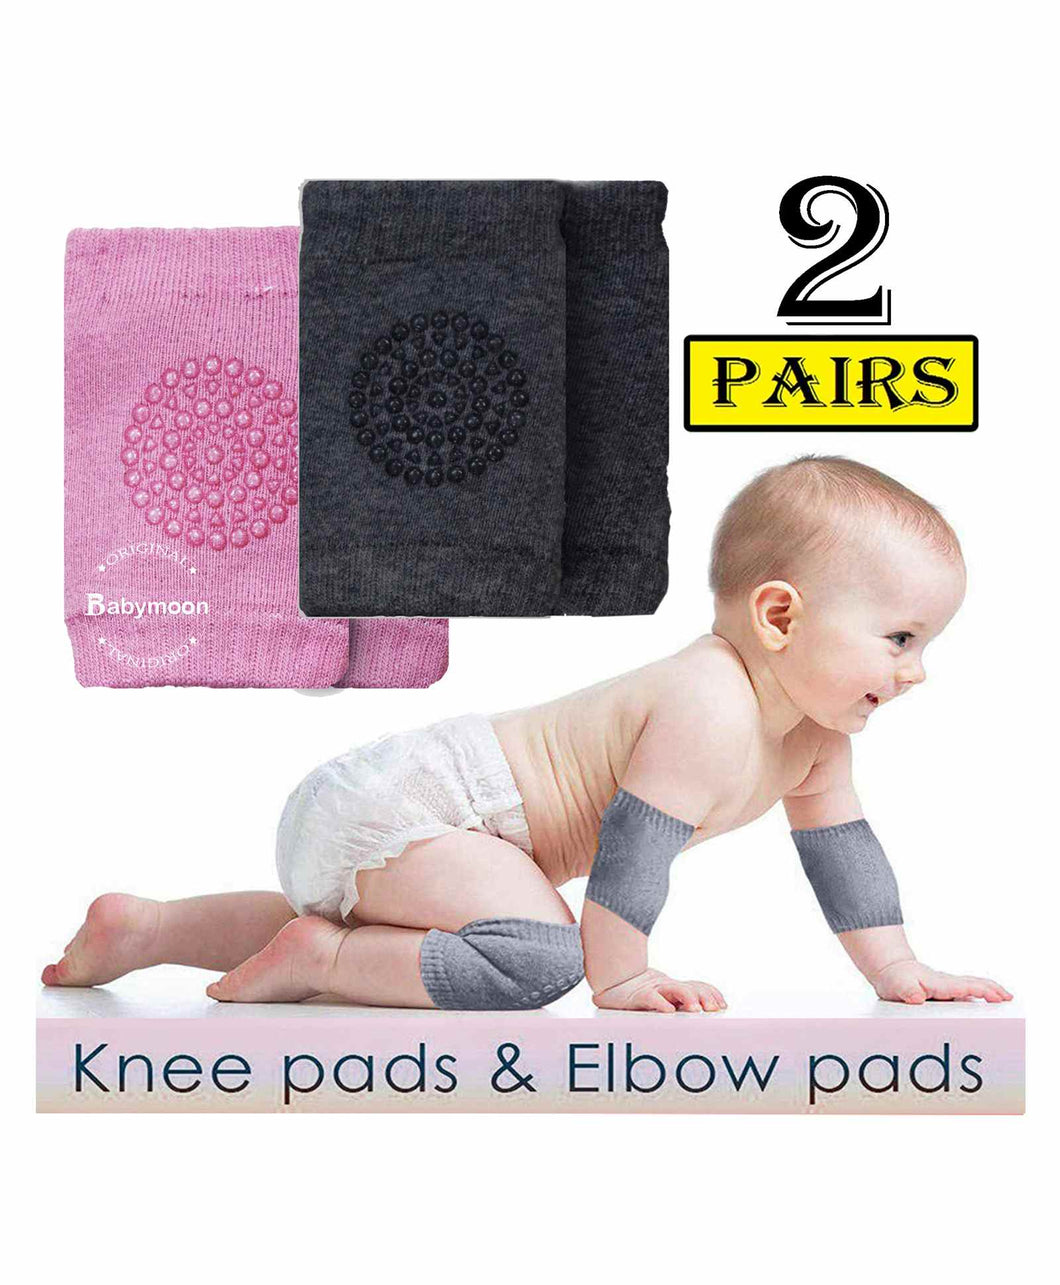 Babymoon Baby Kids Knee Pads AntiSlip Stretchable Knee Cap Elbow Safety - Dark Grey & Pink